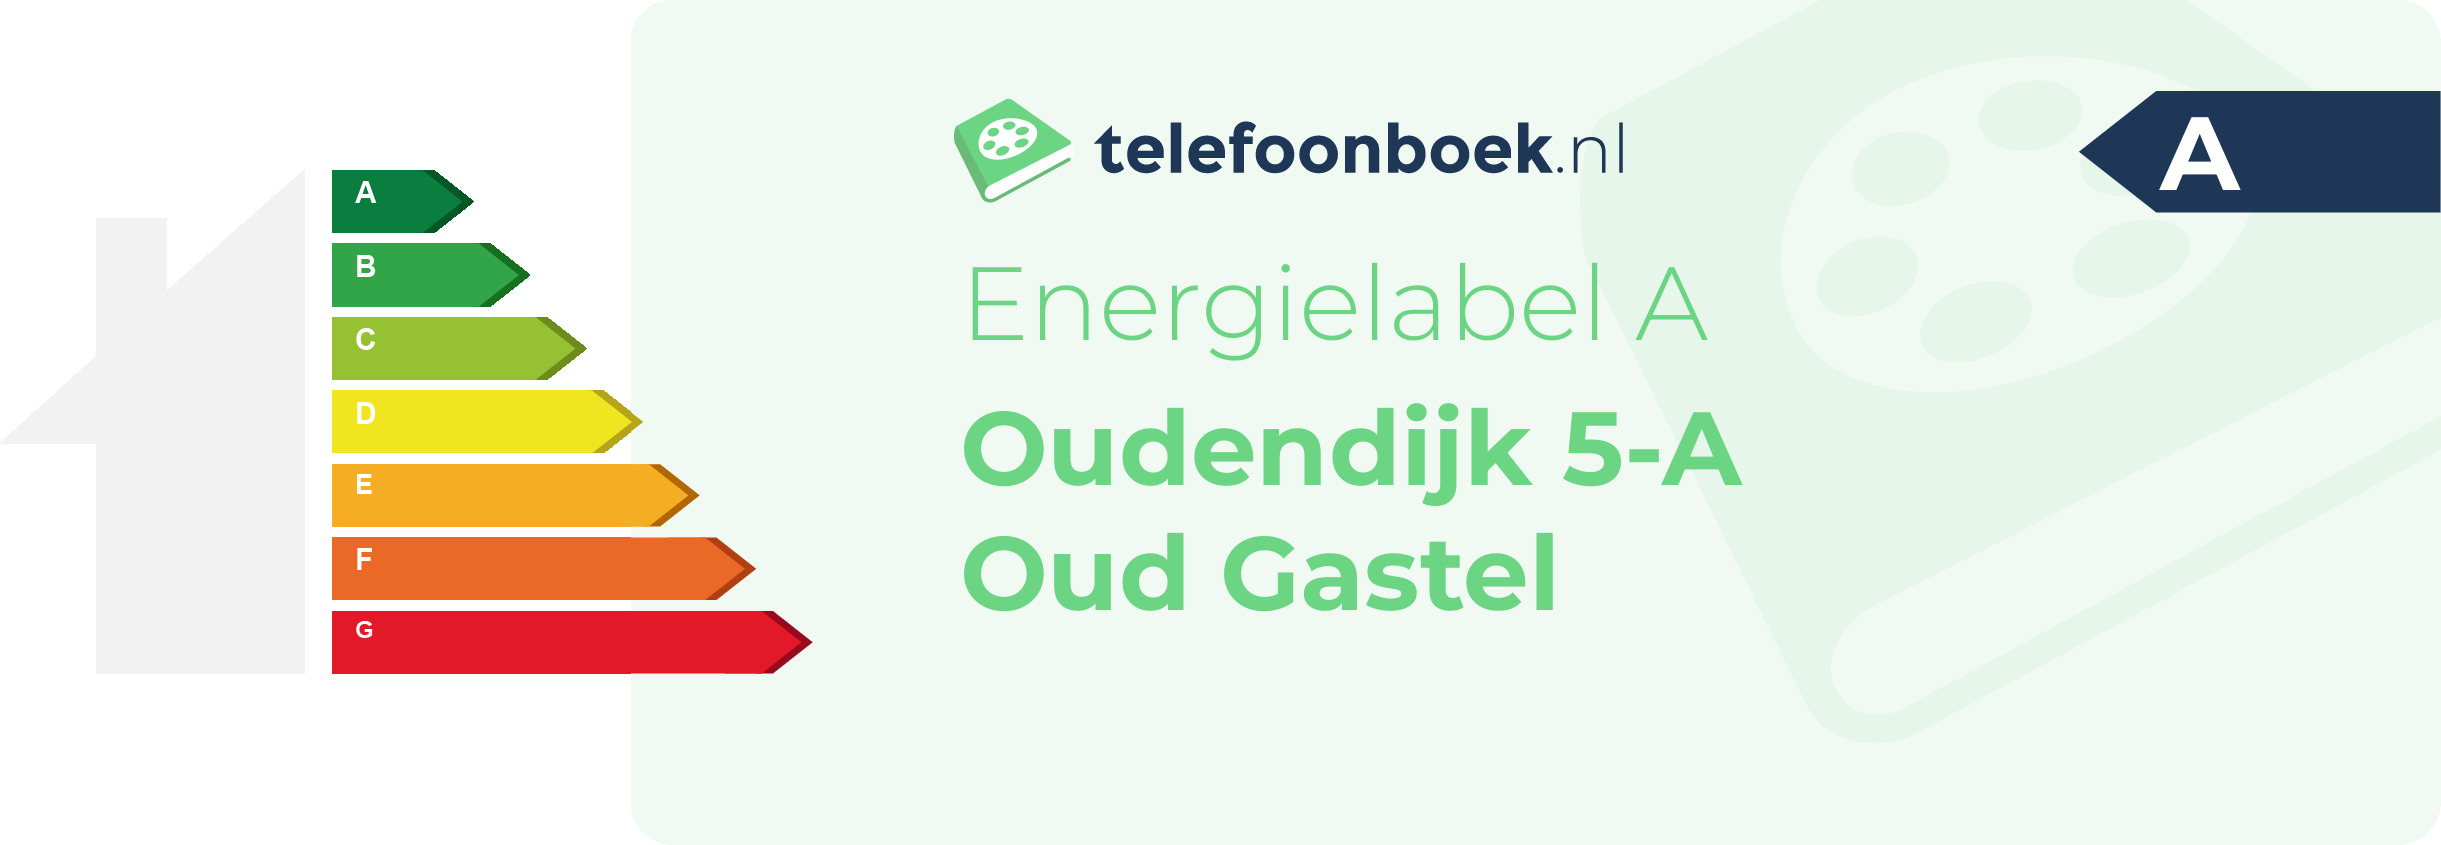 Energielabel Oudendijk 5-A Oud Gastel